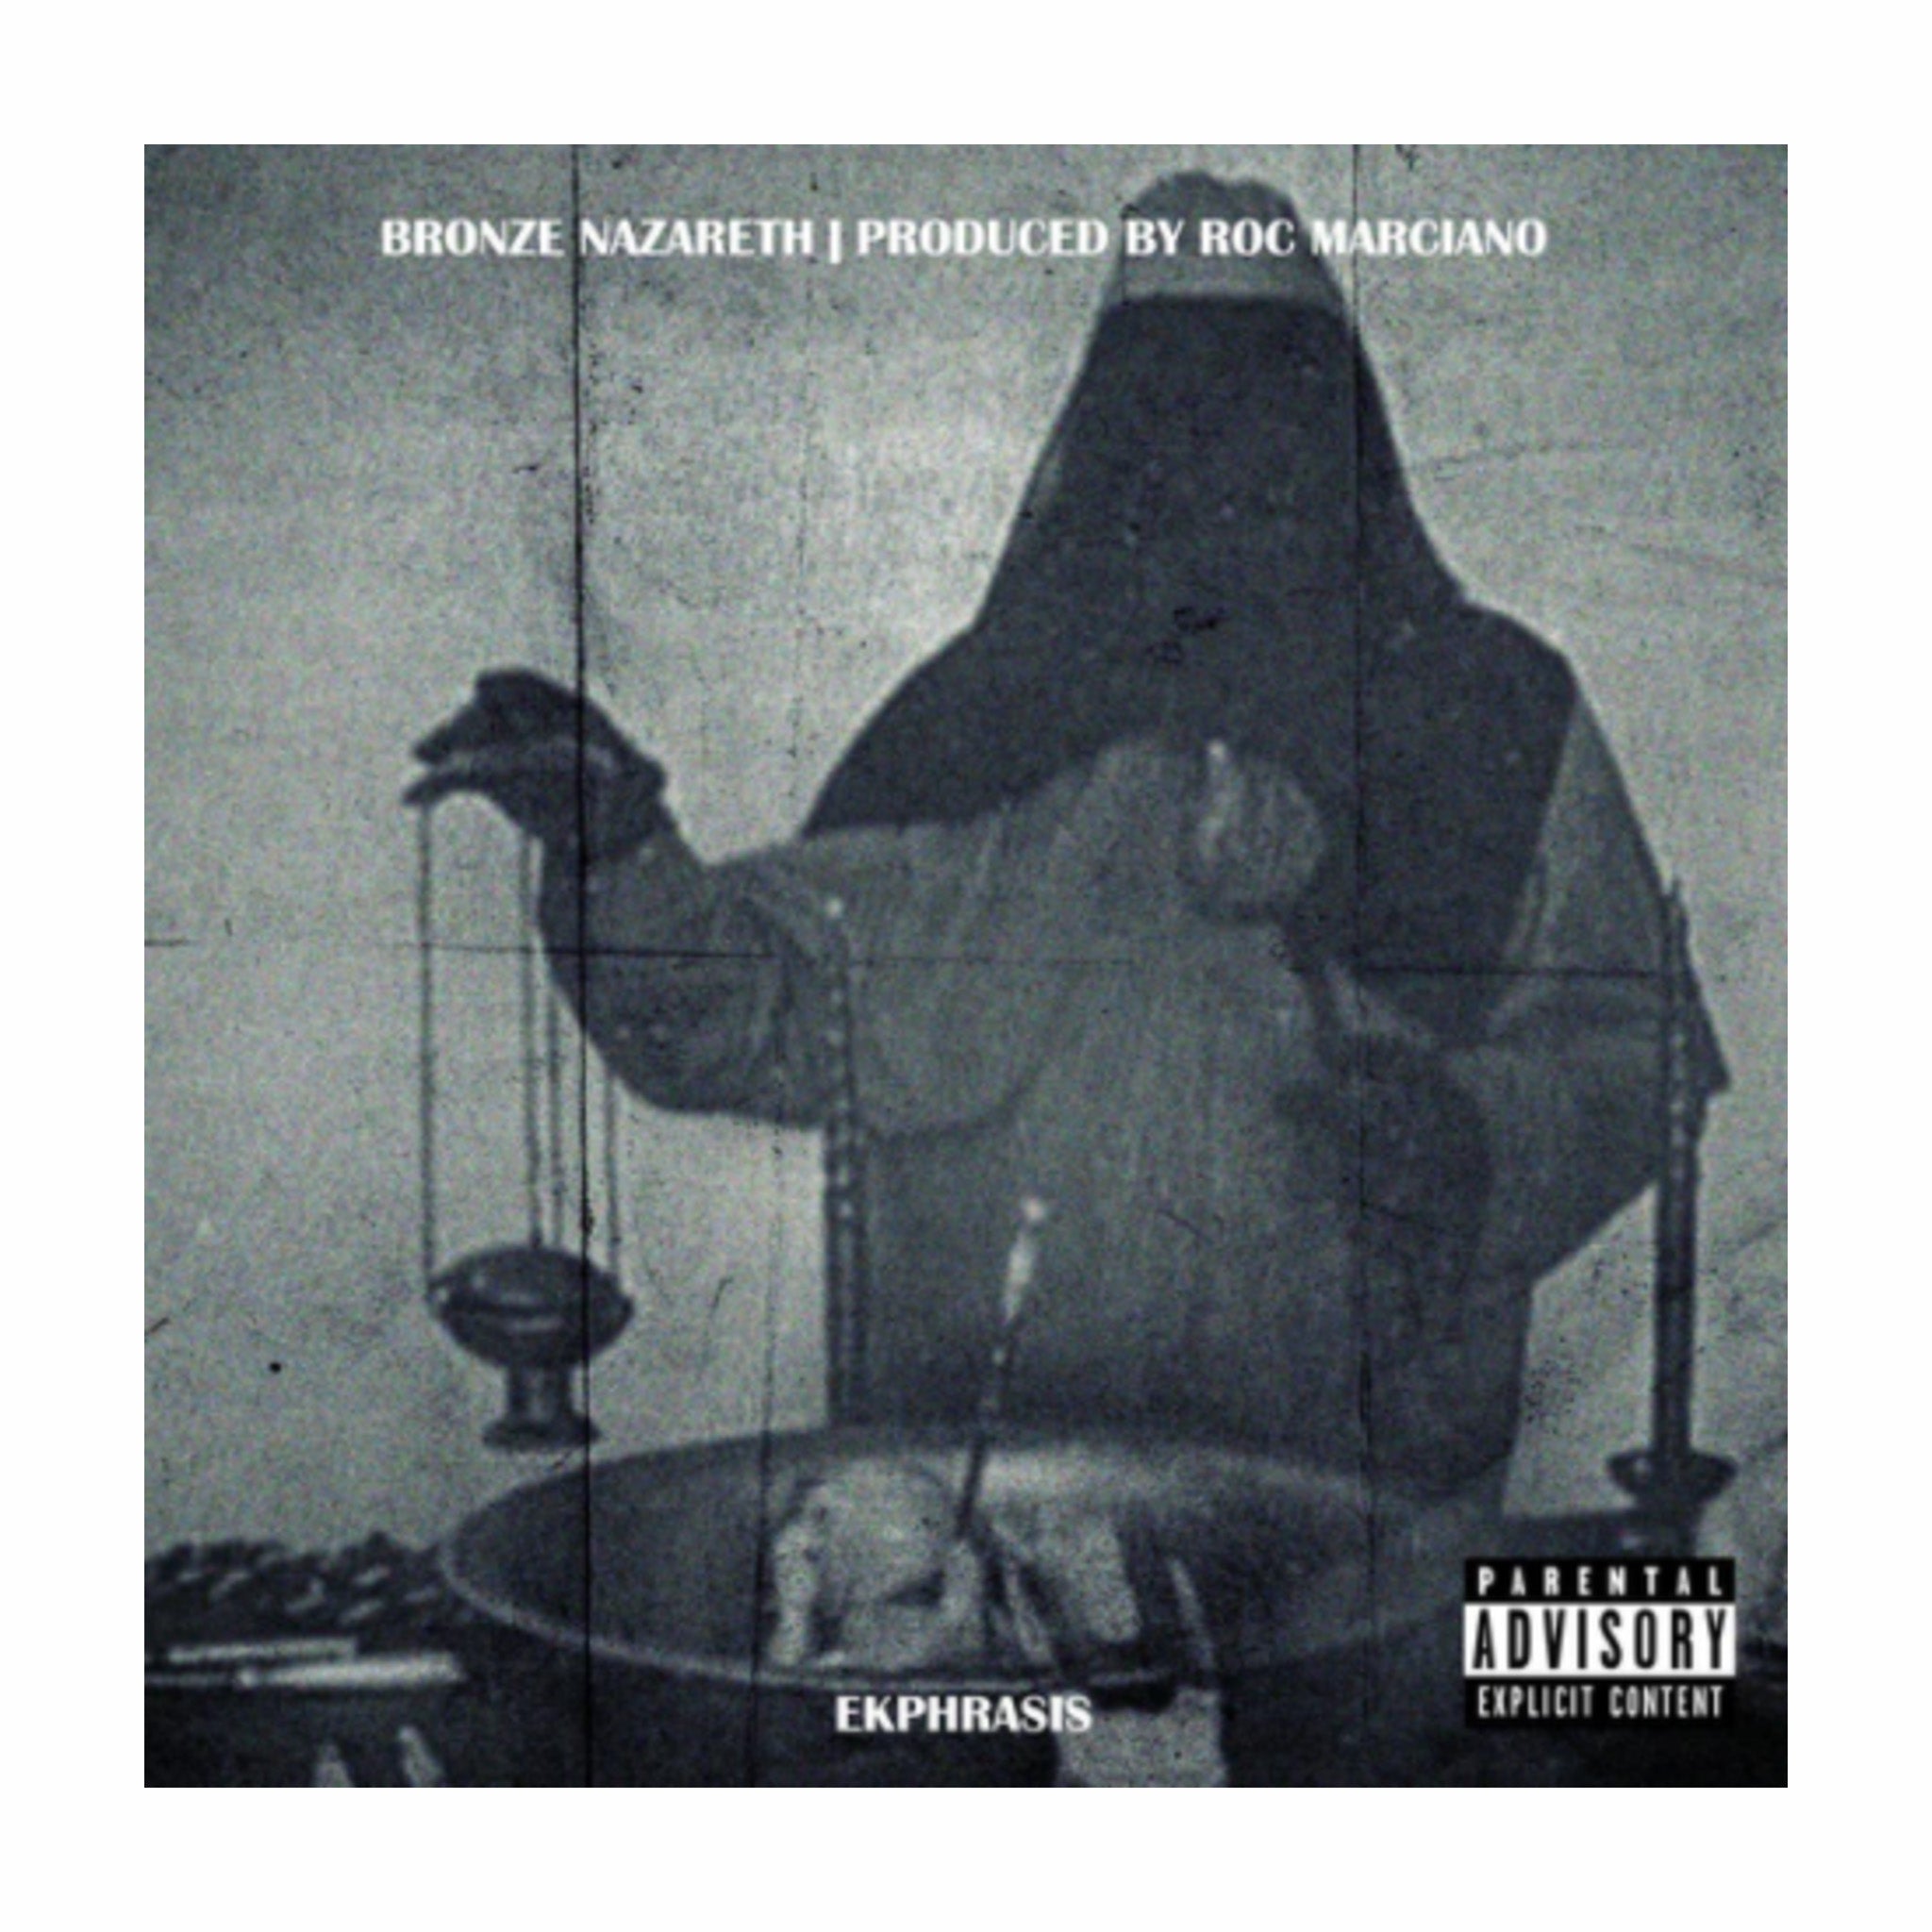 In vinile, Bronzo Nazareth & Roc Marciano "Ekphrasis" LP